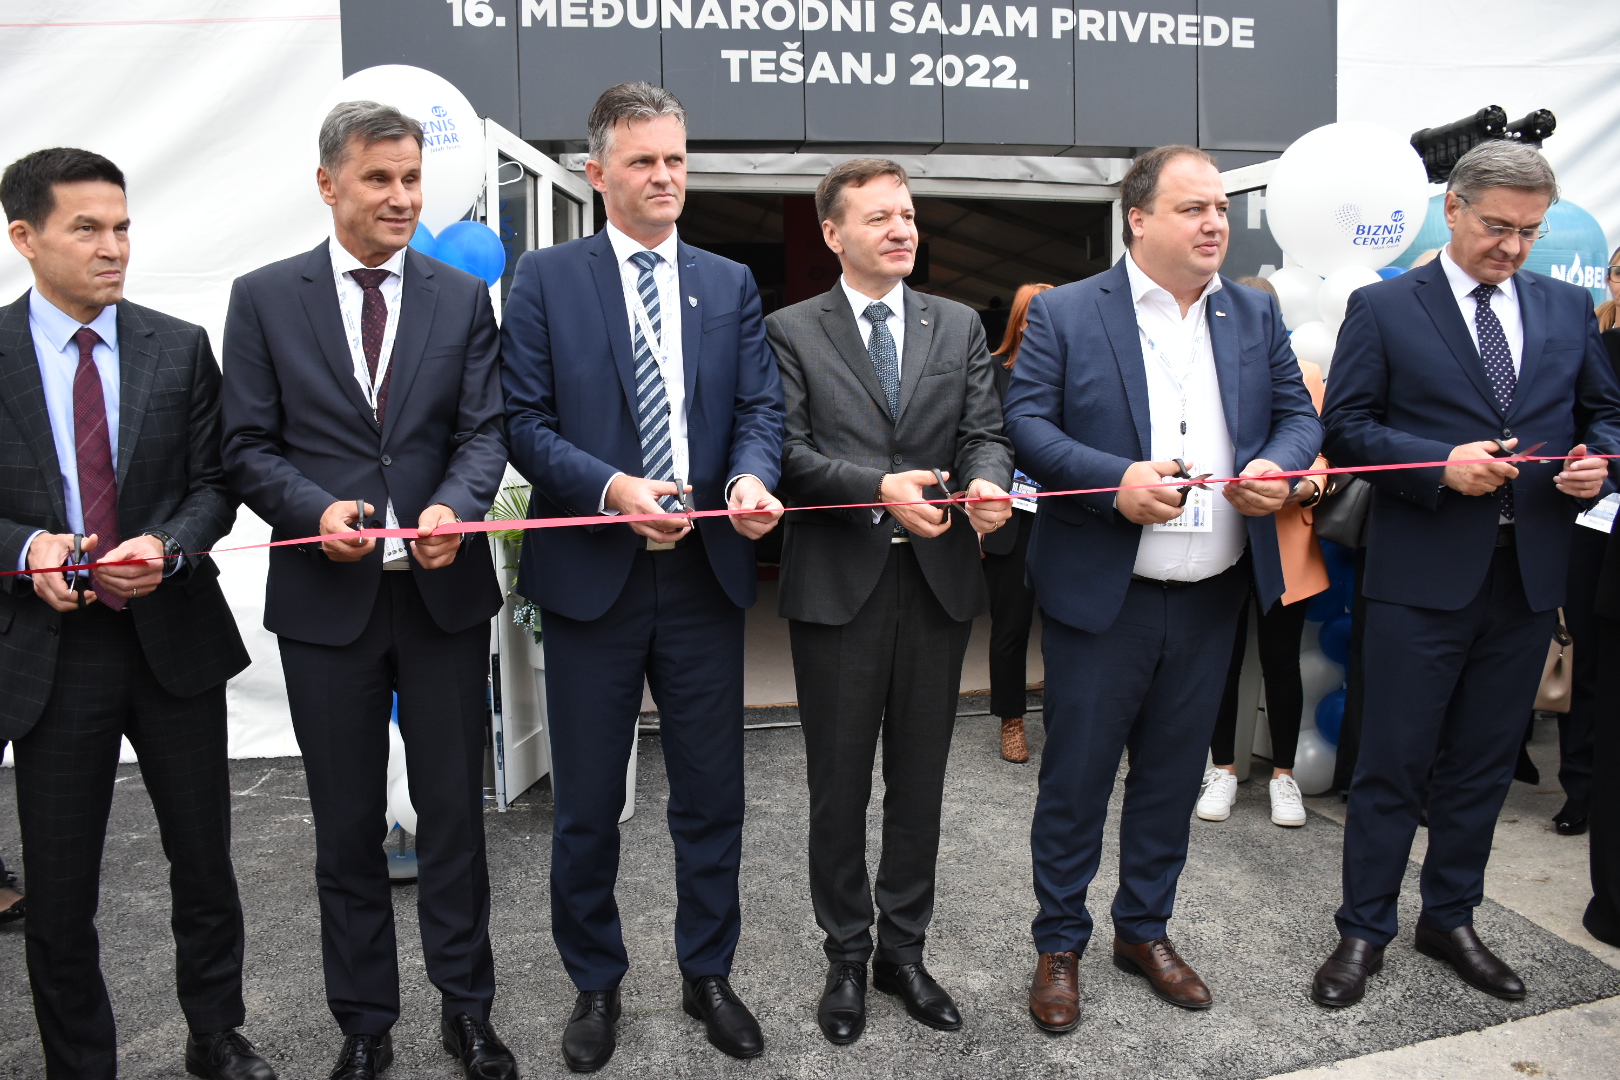 Svečano otvoren 16. međunarodni sajam privrede Tešanj 2022: ZDK je kičma privrede FBiH i BiH